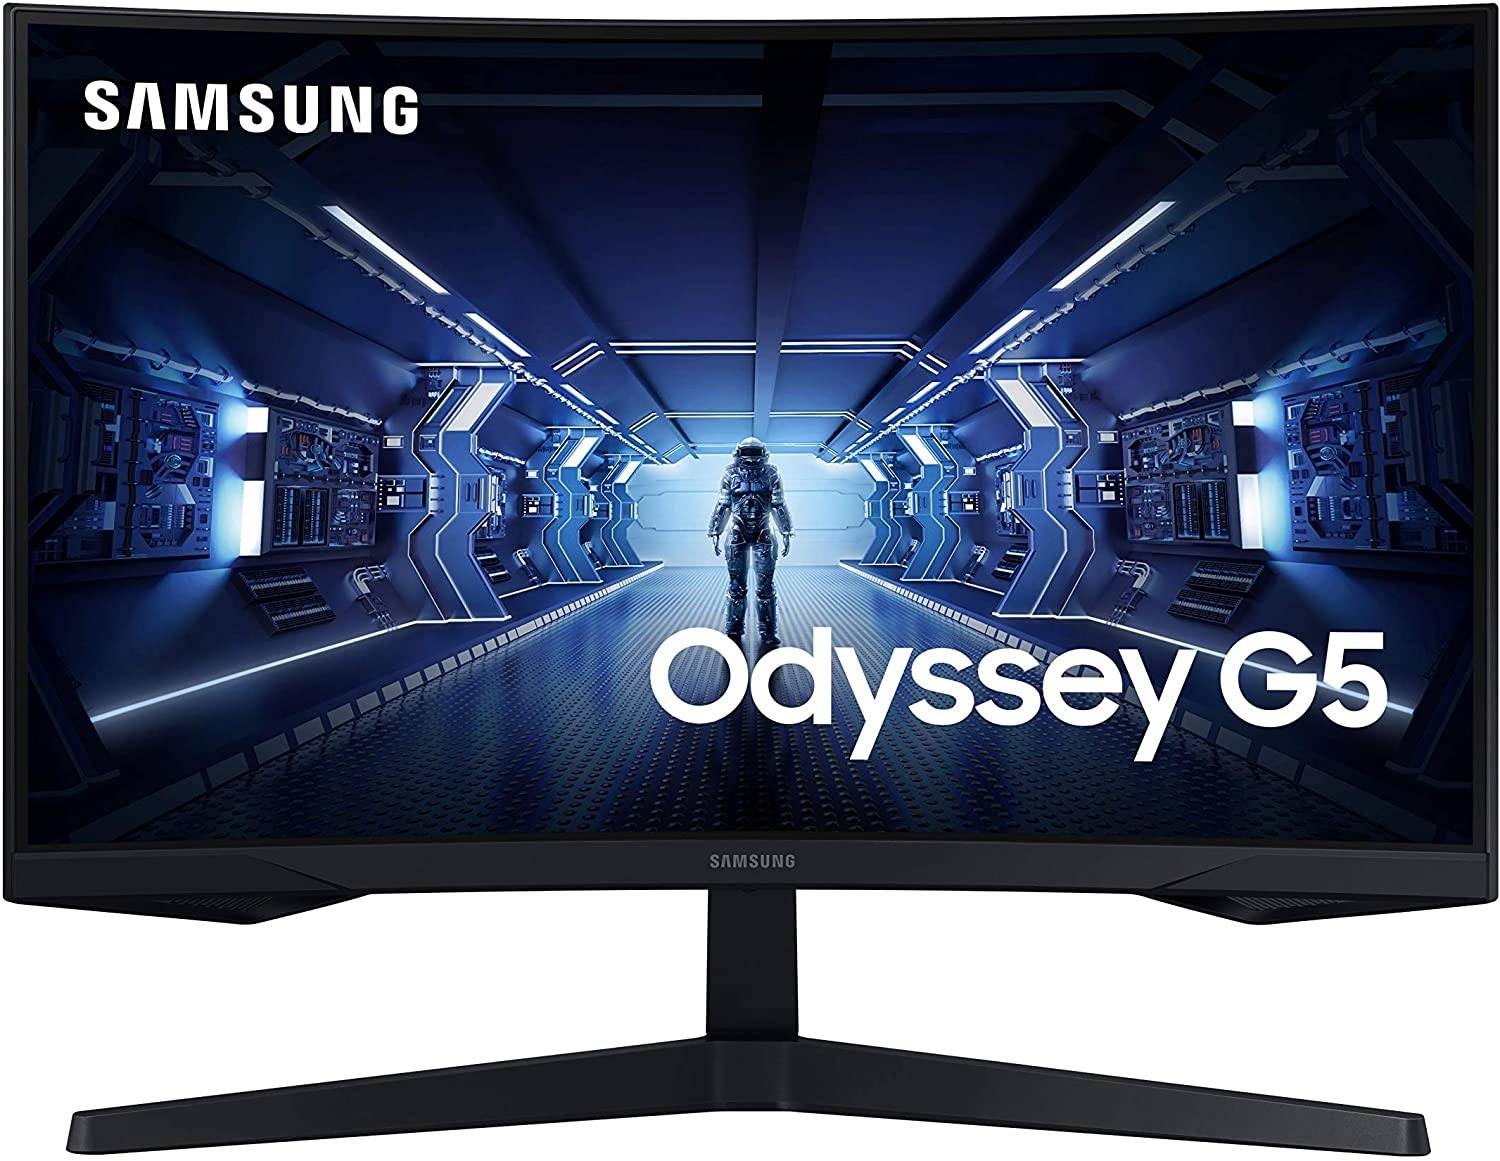 Samsung Odyssey G5 Series PBI